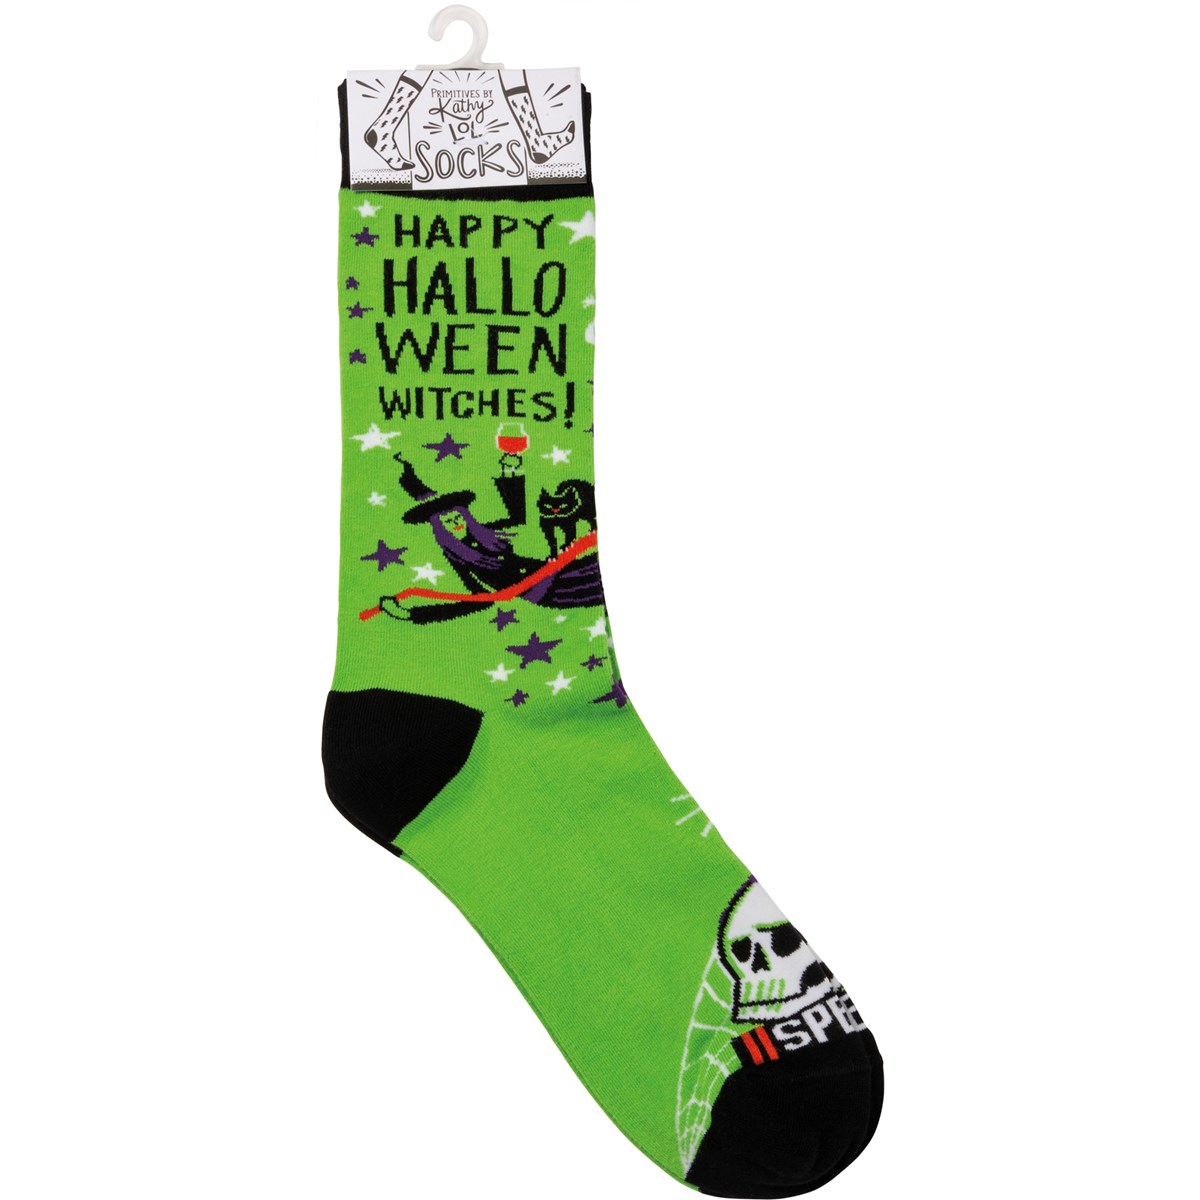 Happy Halloween Witches Socks - Cotton, Nylon, Spandex